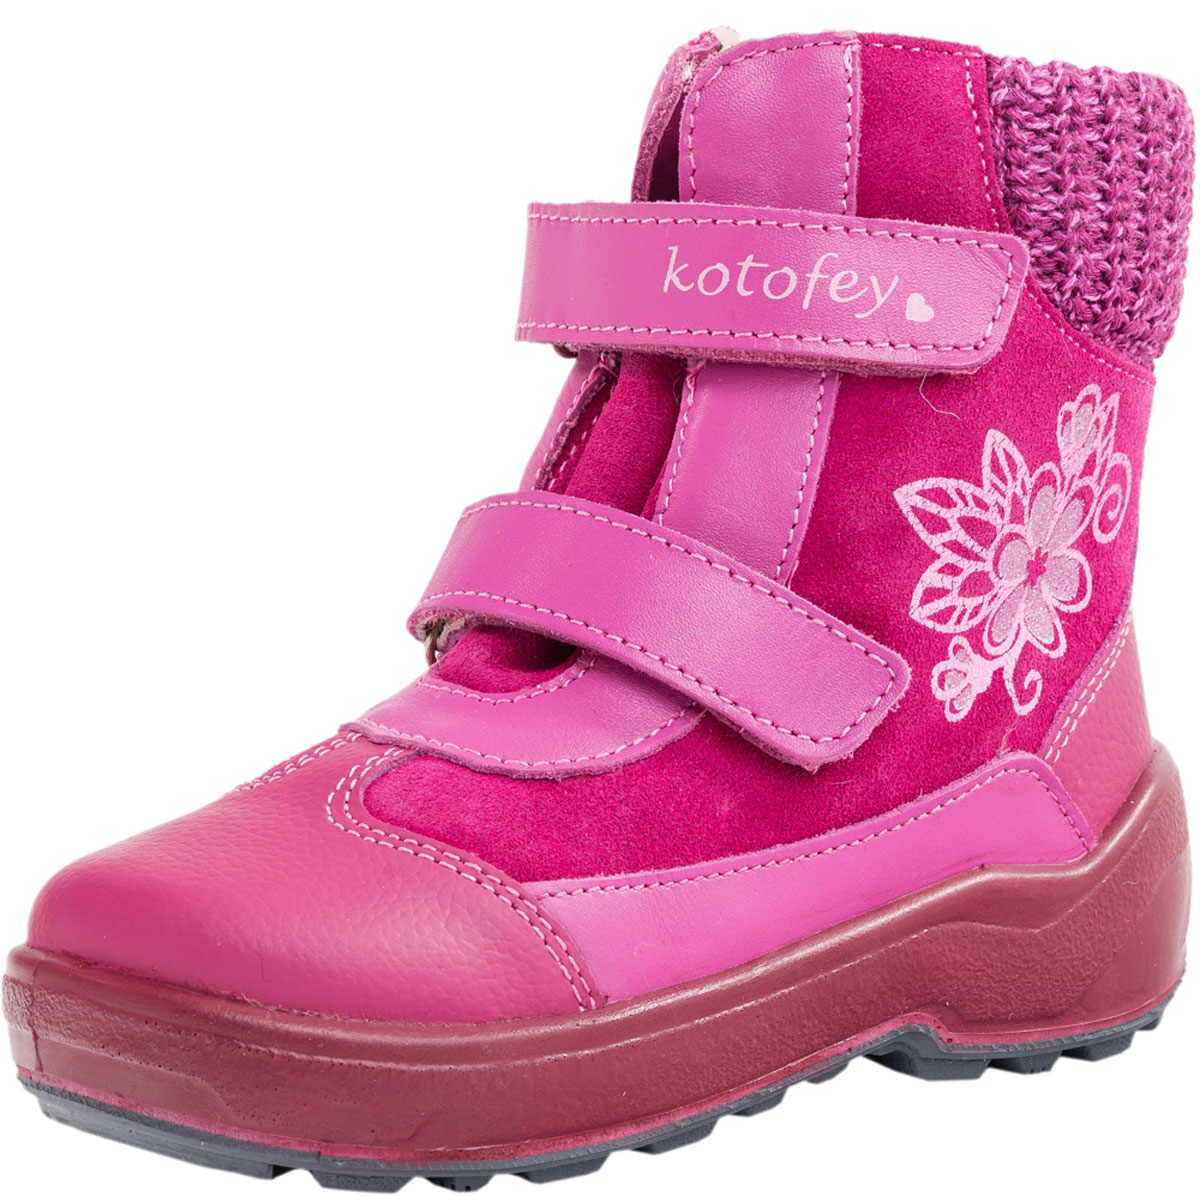 Ботинки для девочки Котофей, цвет: фуксия. 252114-42. Размер 23